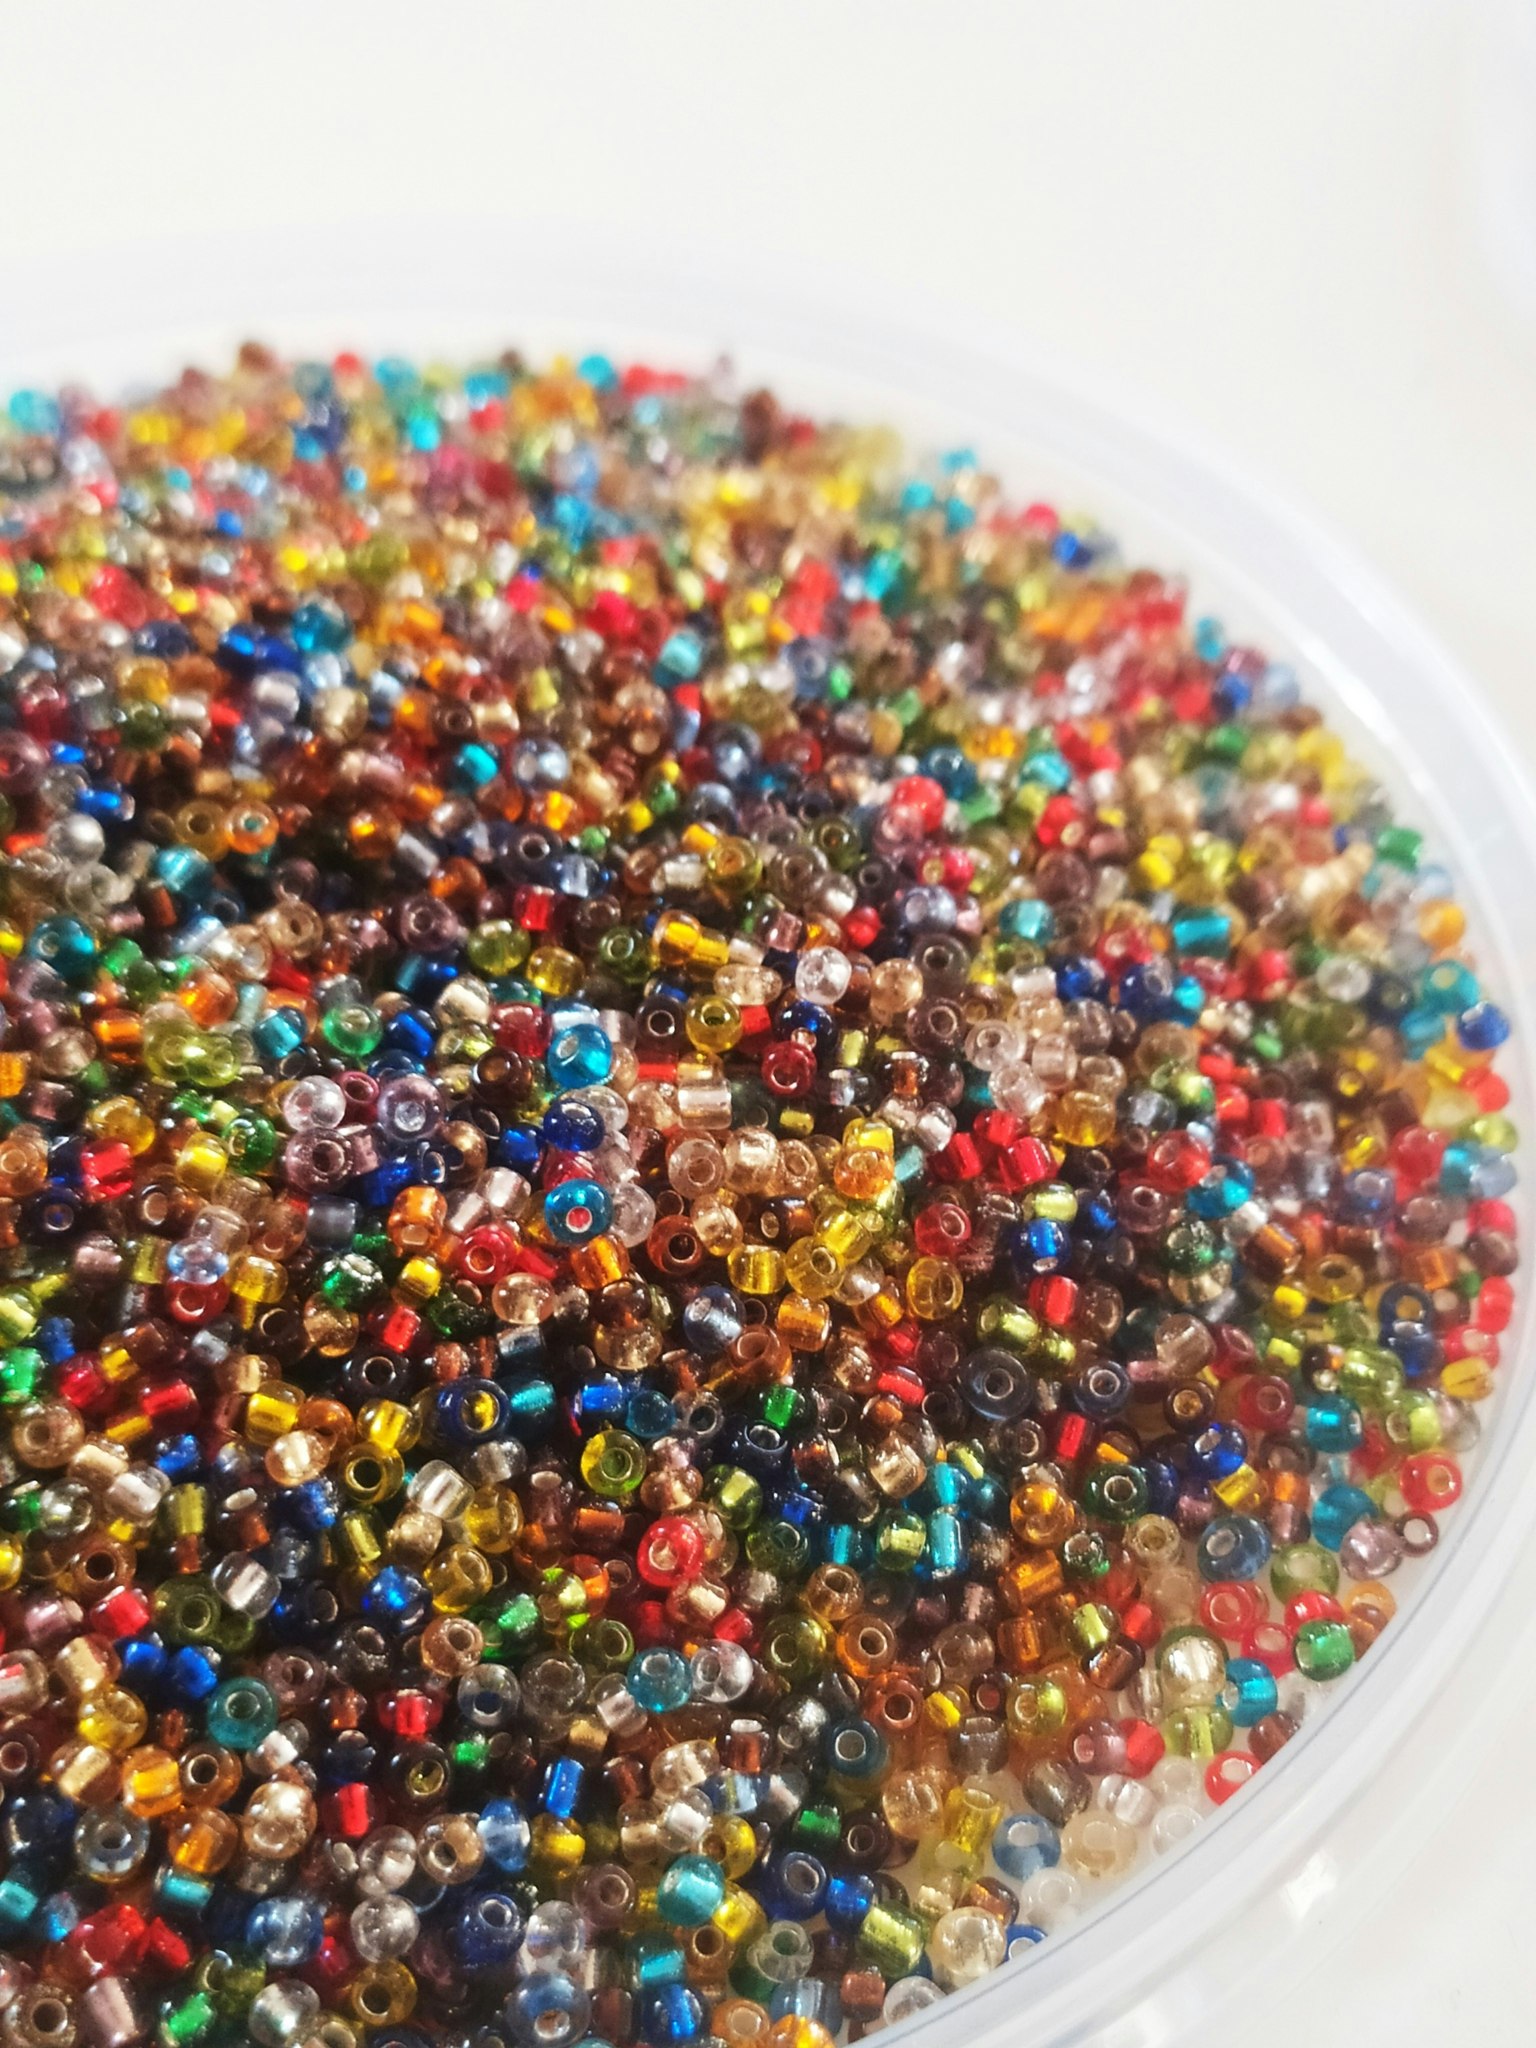 1000st Glaspärlor Seed Beads 2mm - Golden Mix